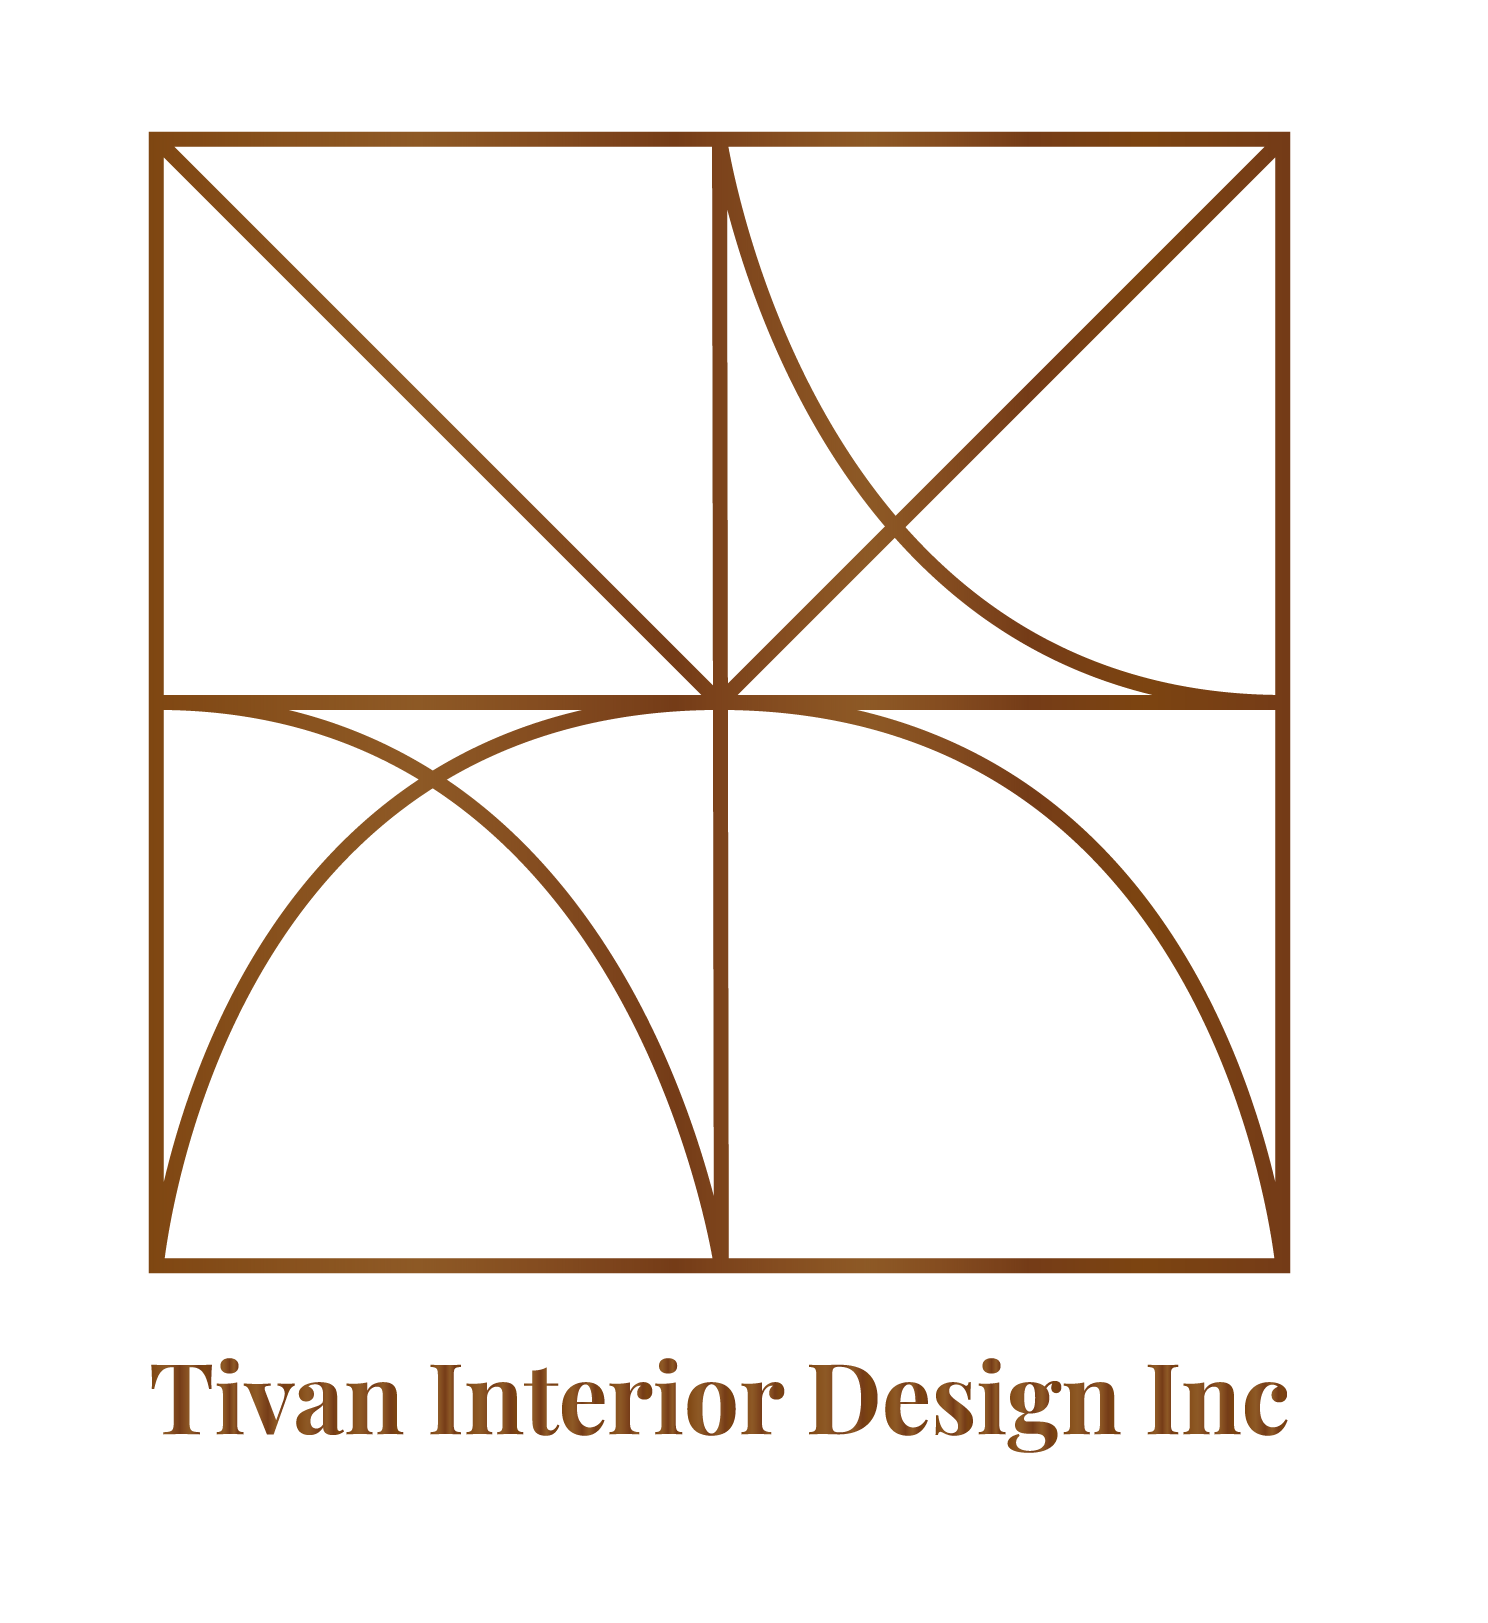 Tivan Interior Design